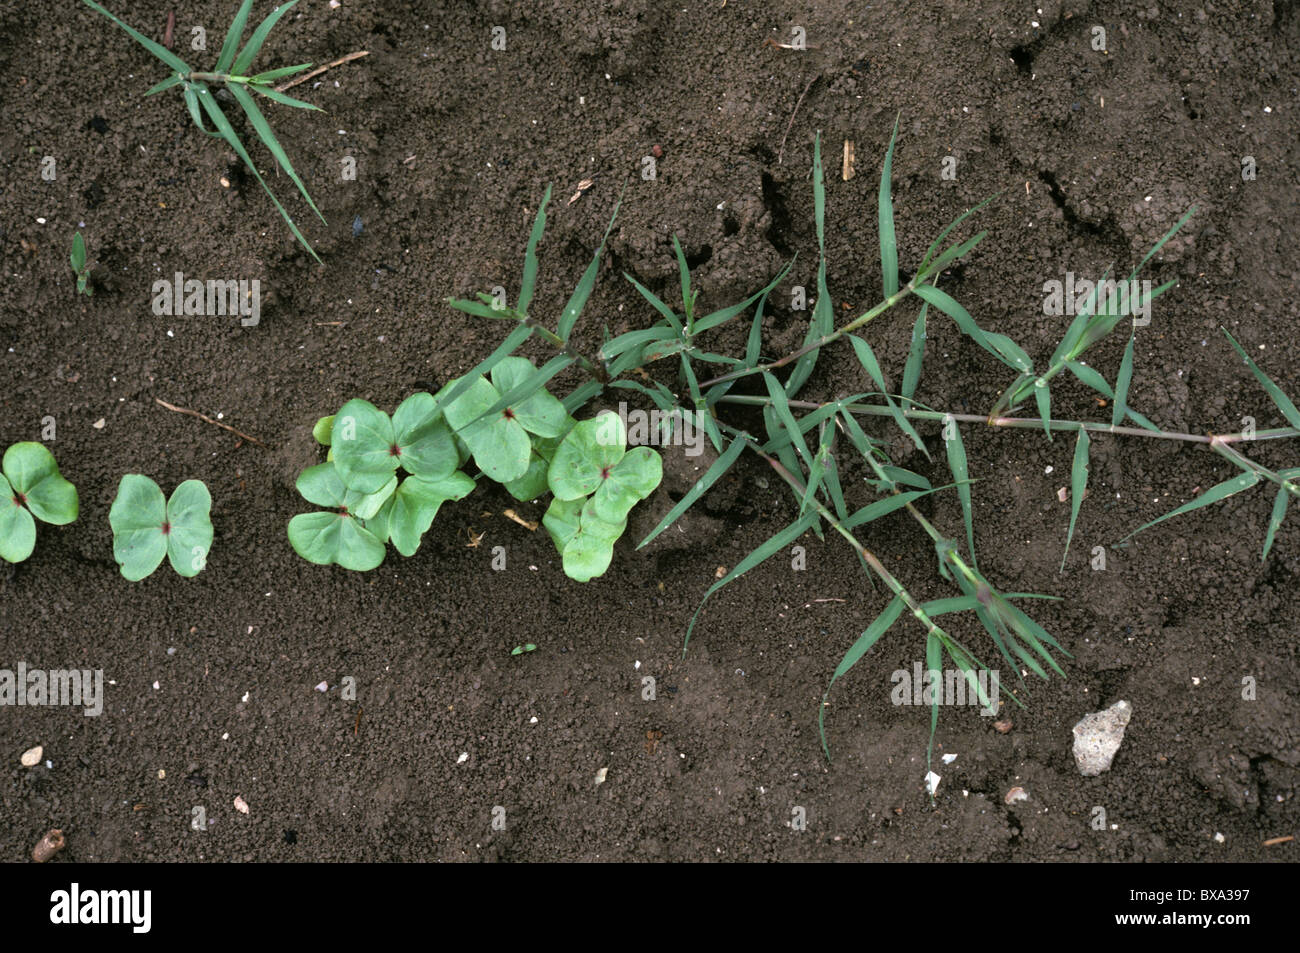 Large or hairy crabgrass (Digitaria sanguinalis) plant in seedling cotton crop, Greece Stock Photo